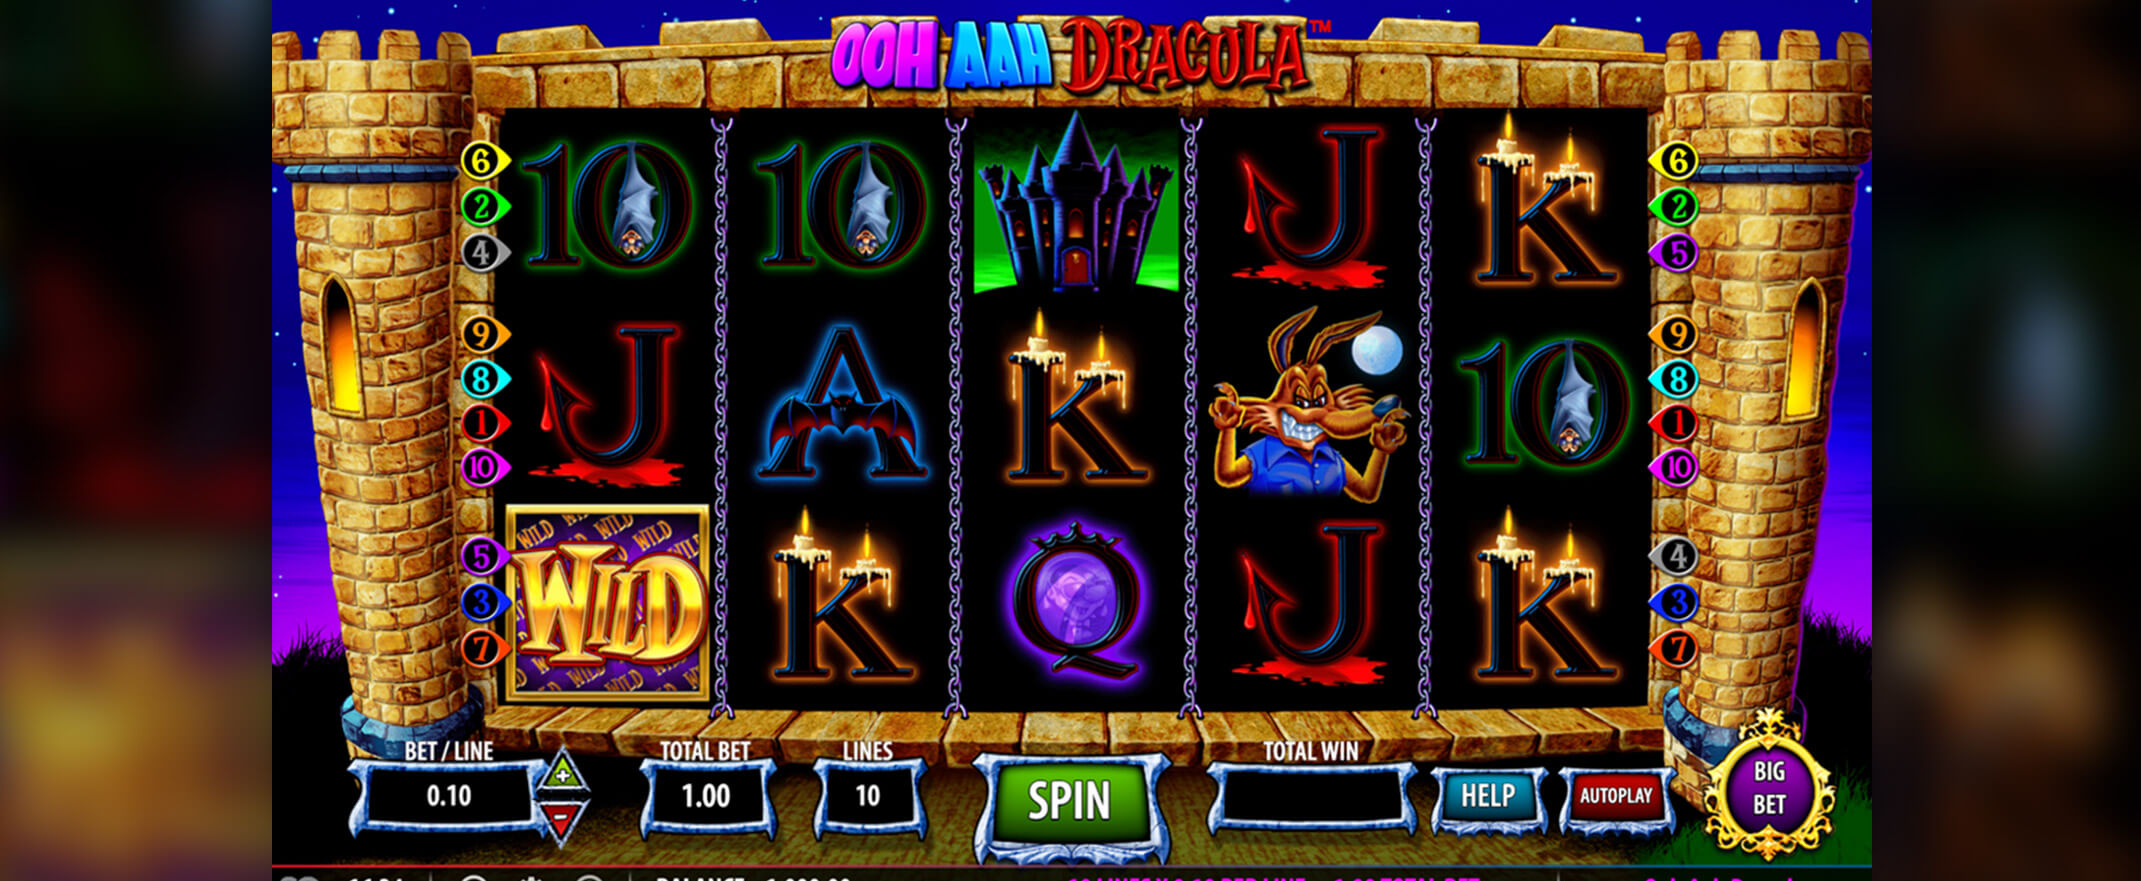 Ooh Aah Dracula Spielautomat von Playcrest